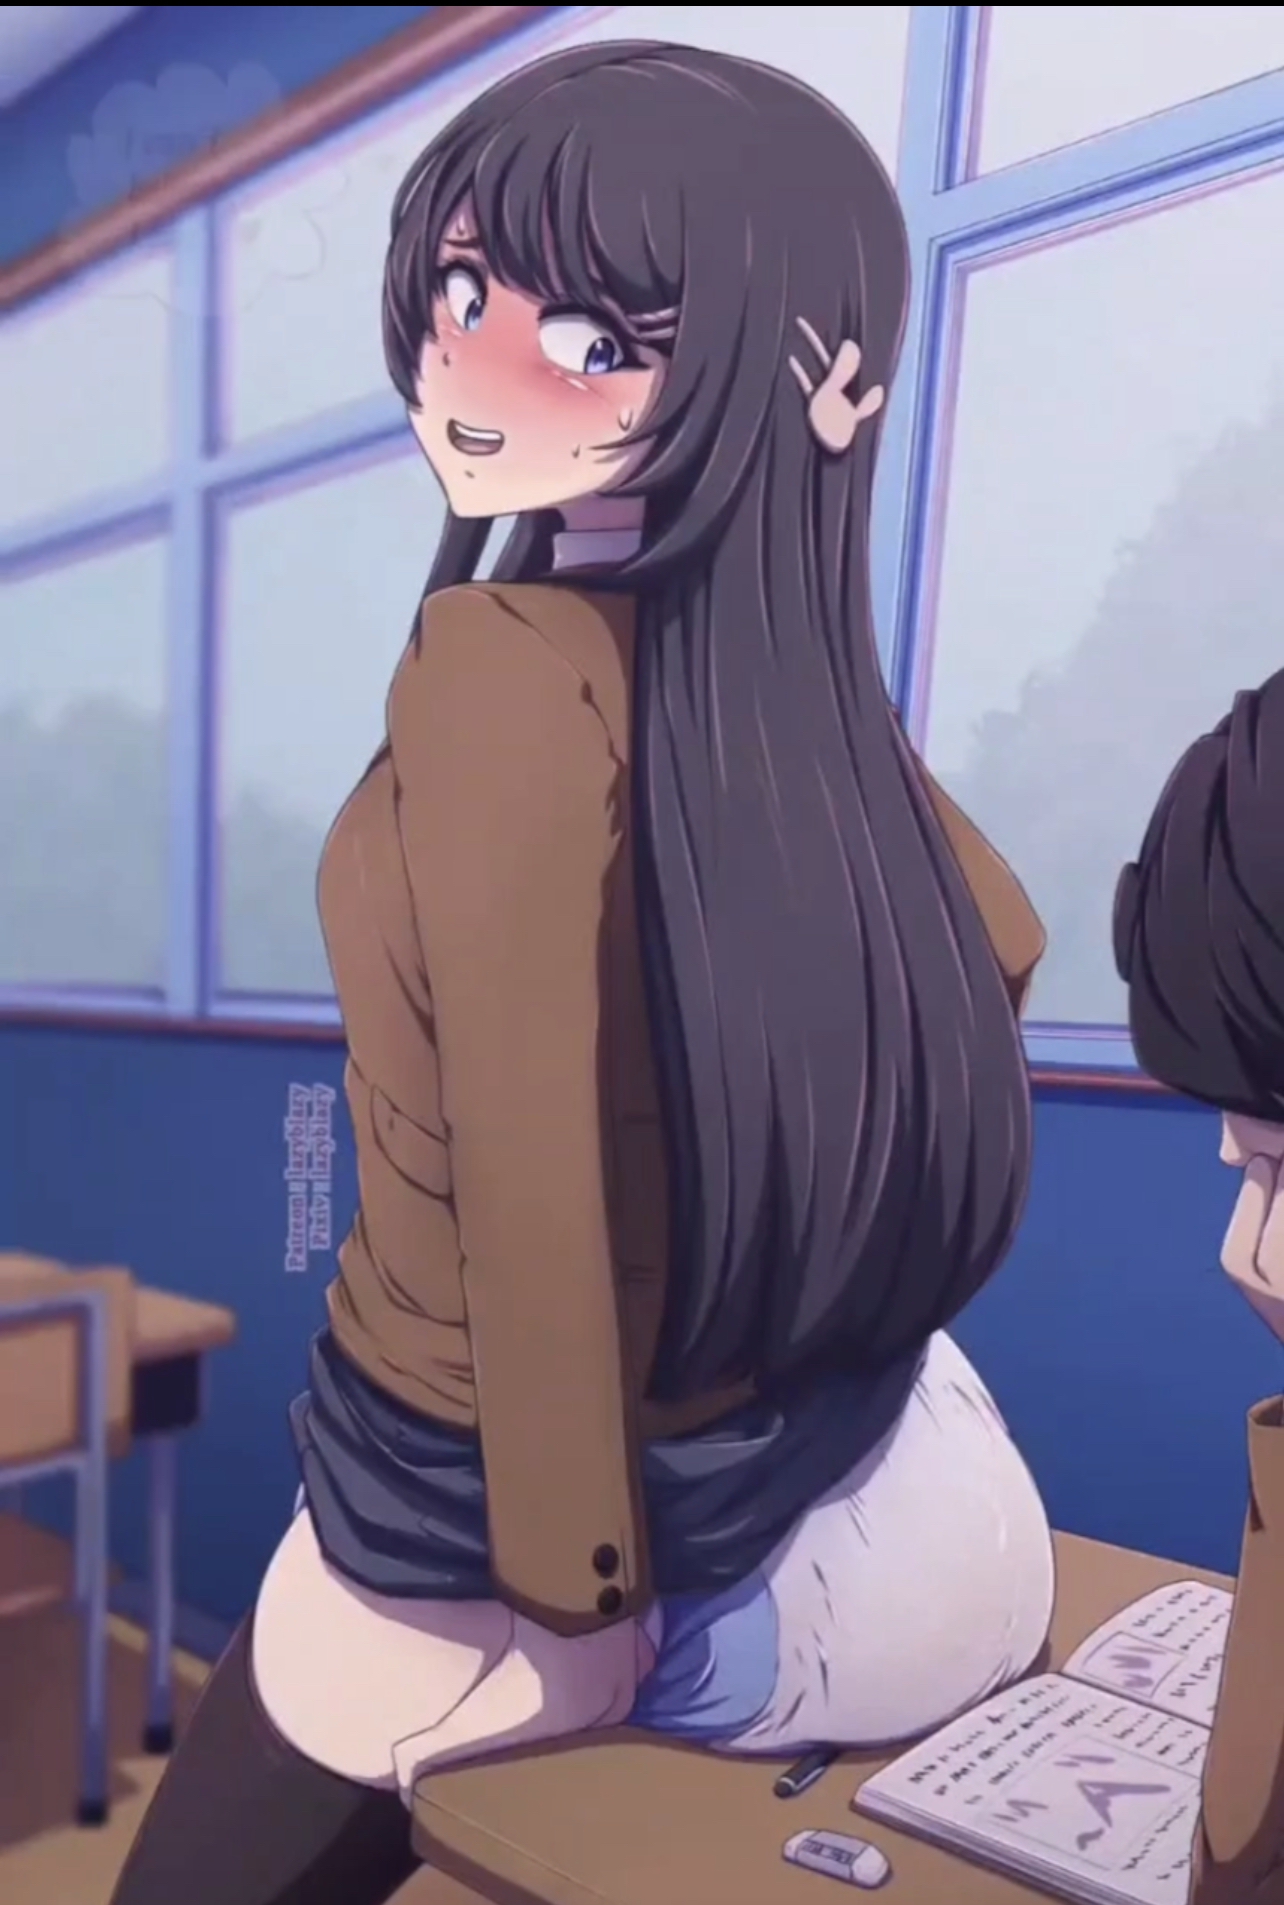 Mai Sakurajima poops her diaper in class (No Audio)